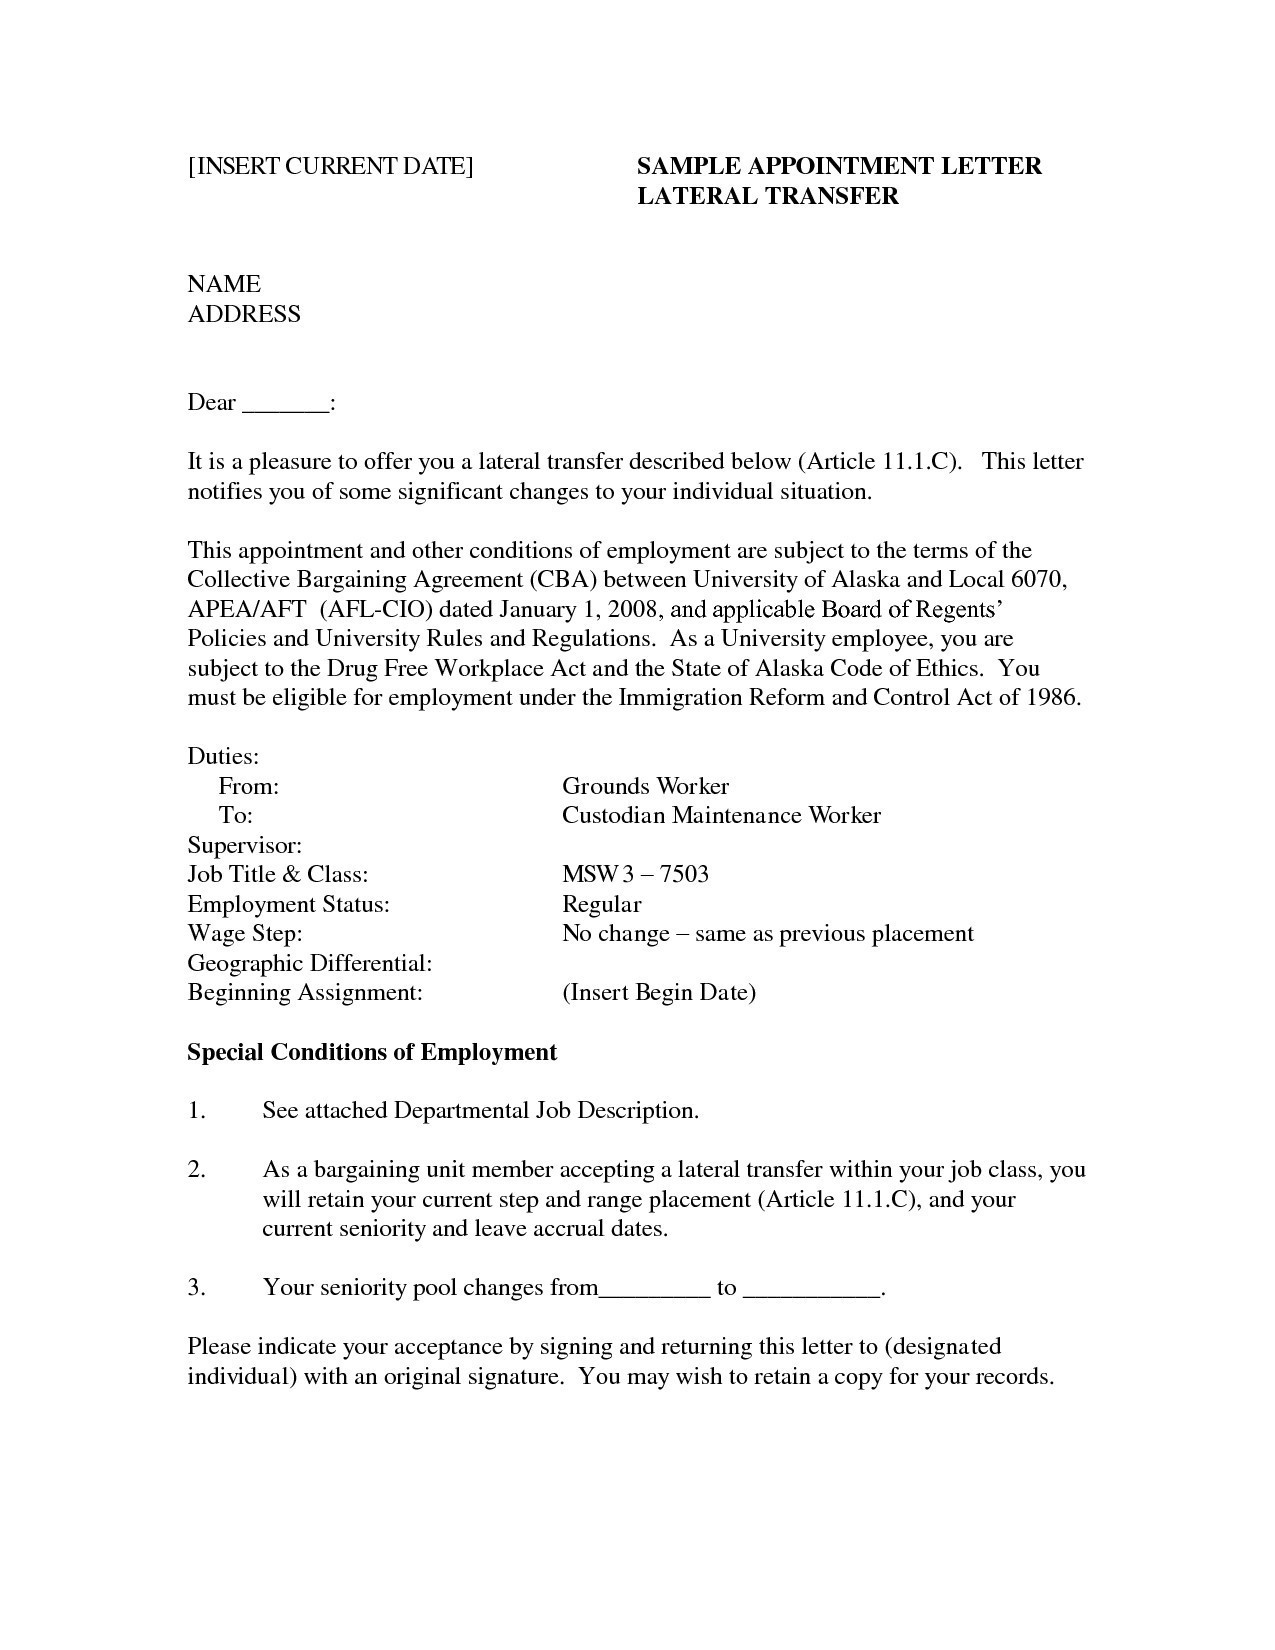 Job Offer Proposal Letter Template - Job Application Letter format Template Copy Cover Letter Template Hr